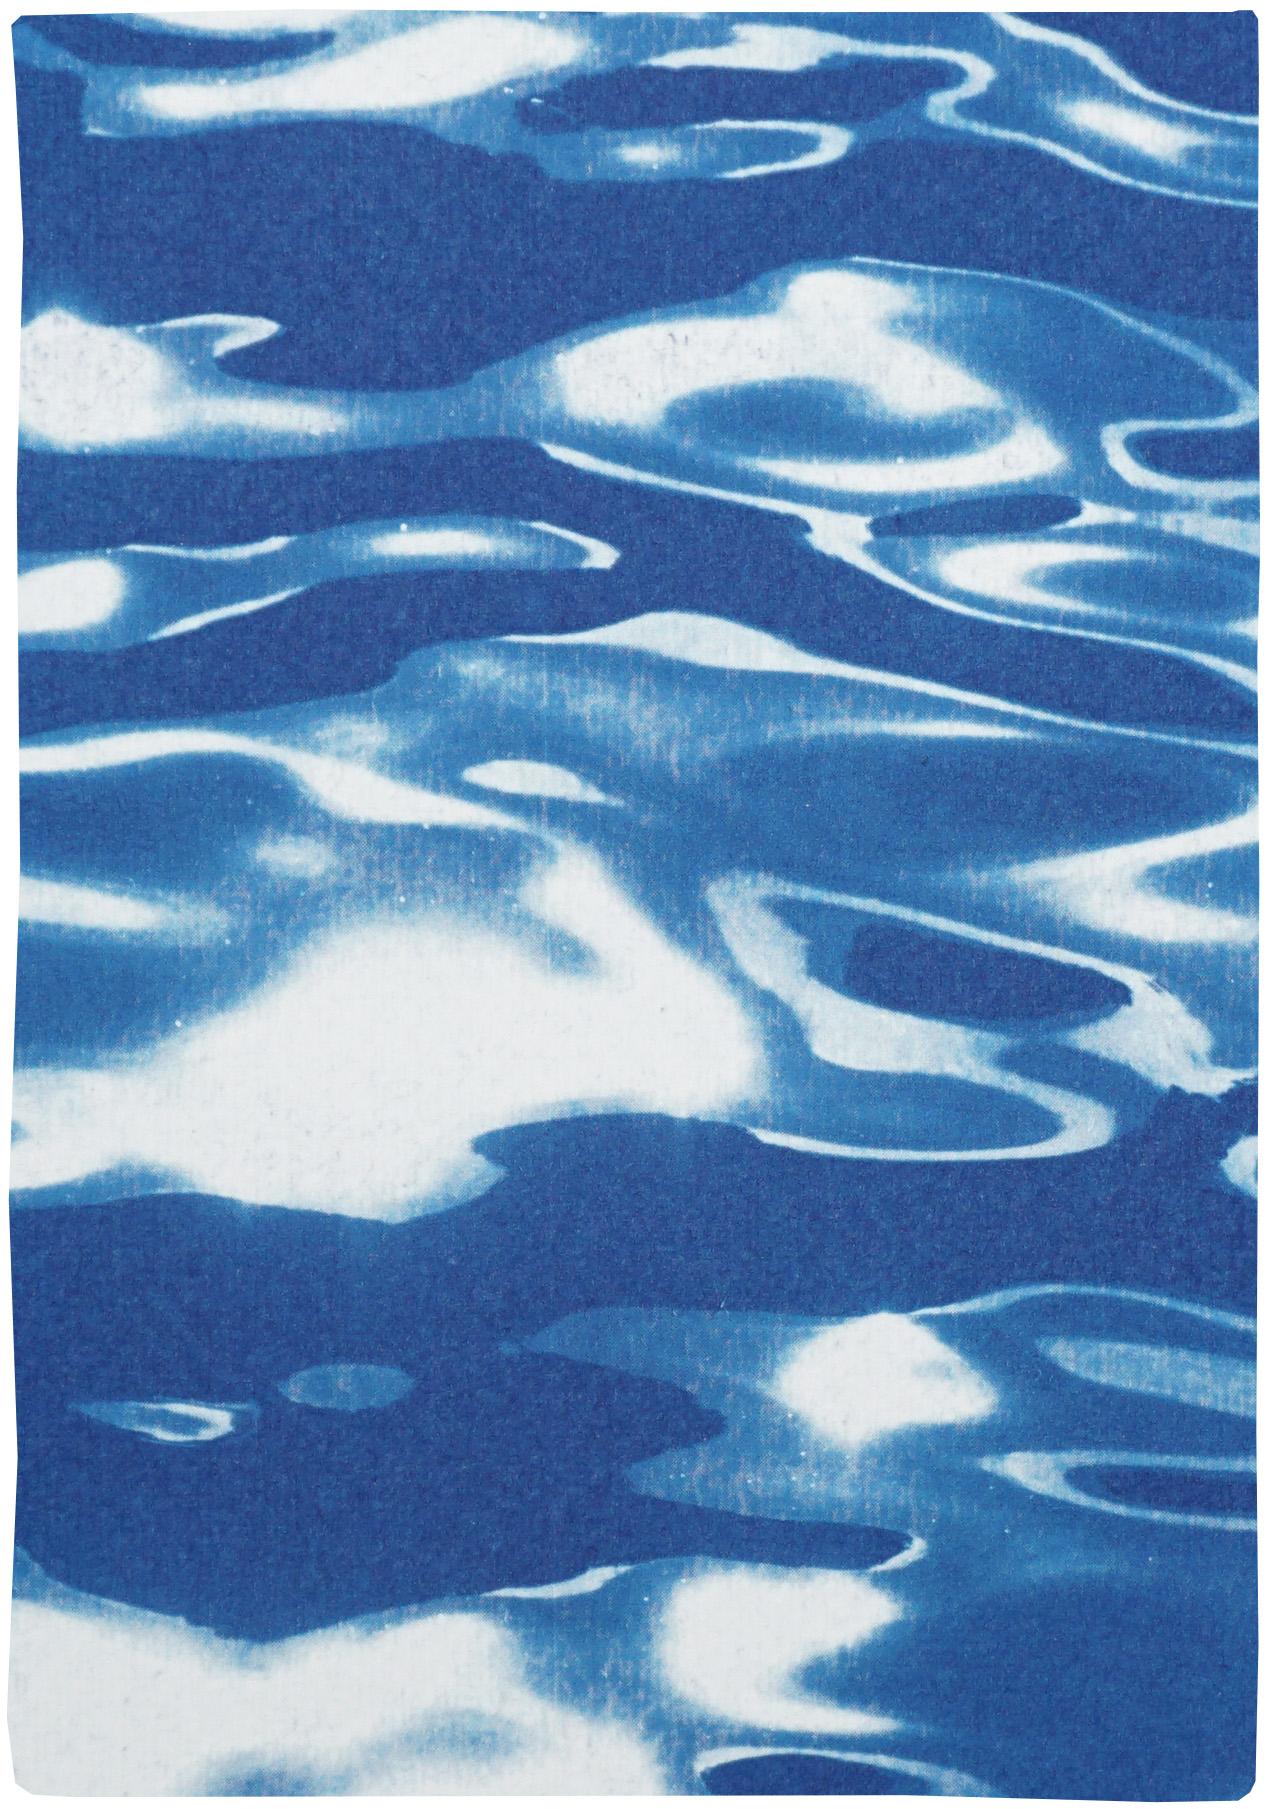 Lido Island Reflections, Venice Landscape Blue Tones, Minimal Cyanotype Print  2